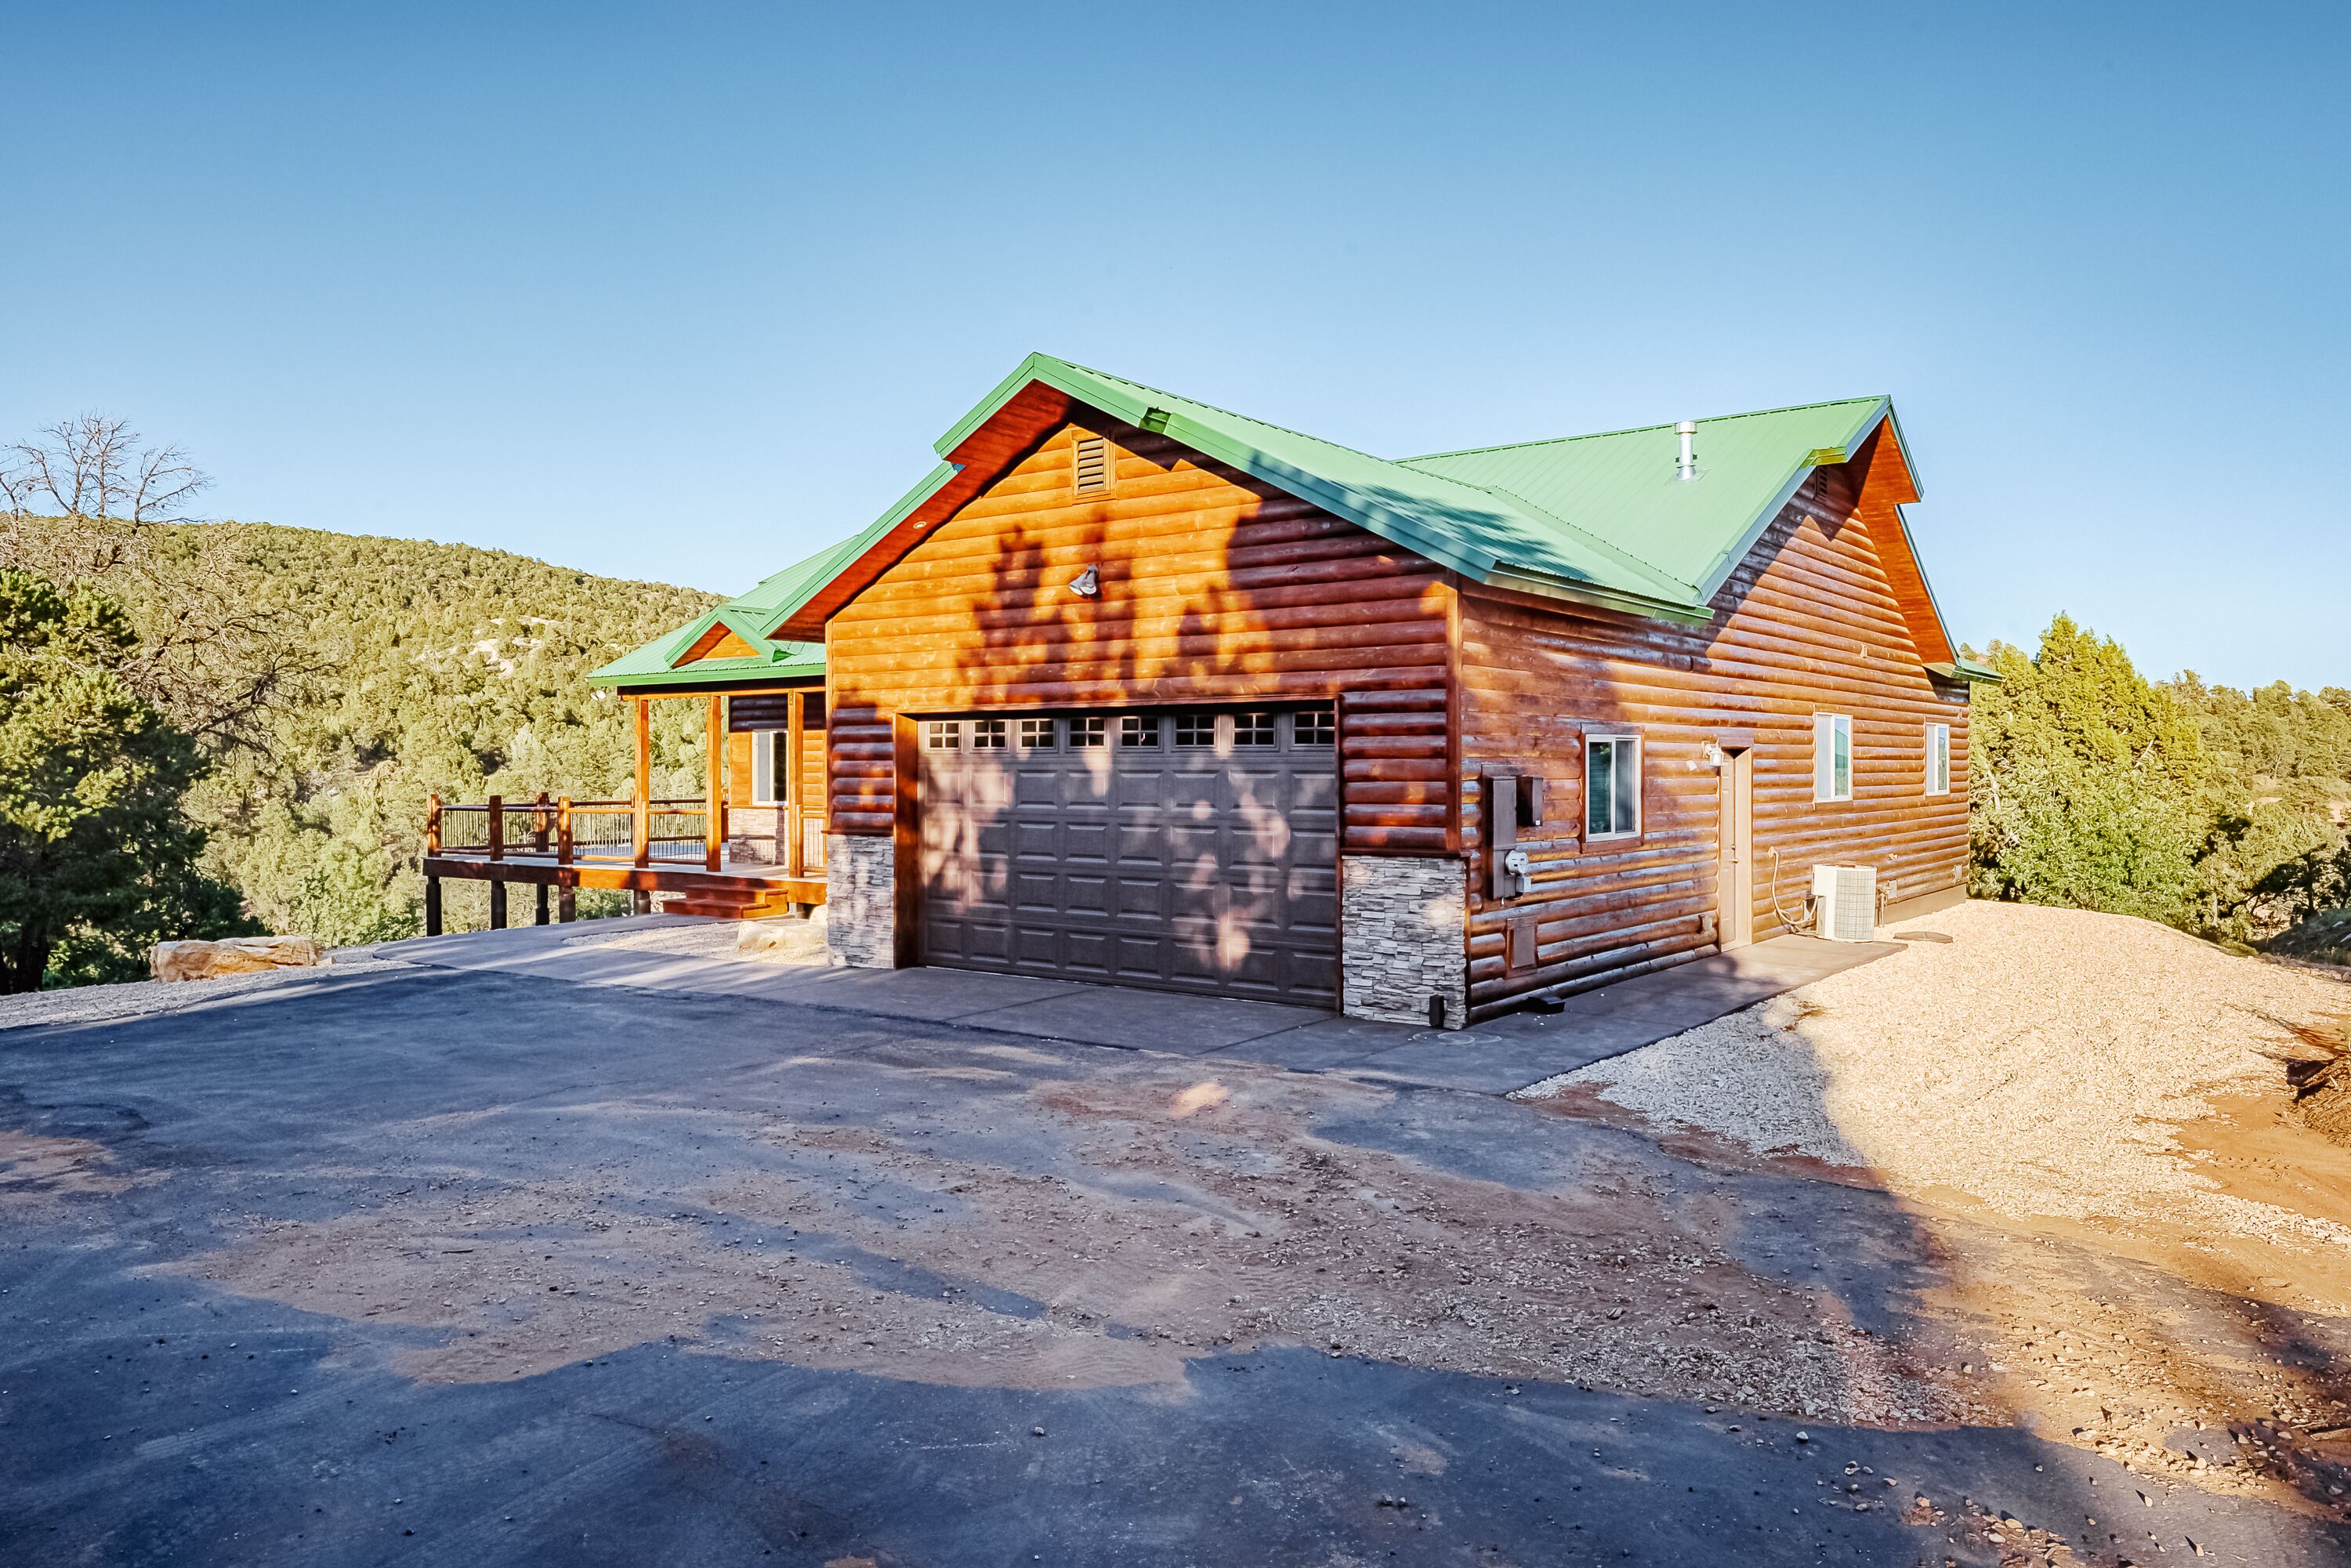 Zion Ponderosa Ranch Resort